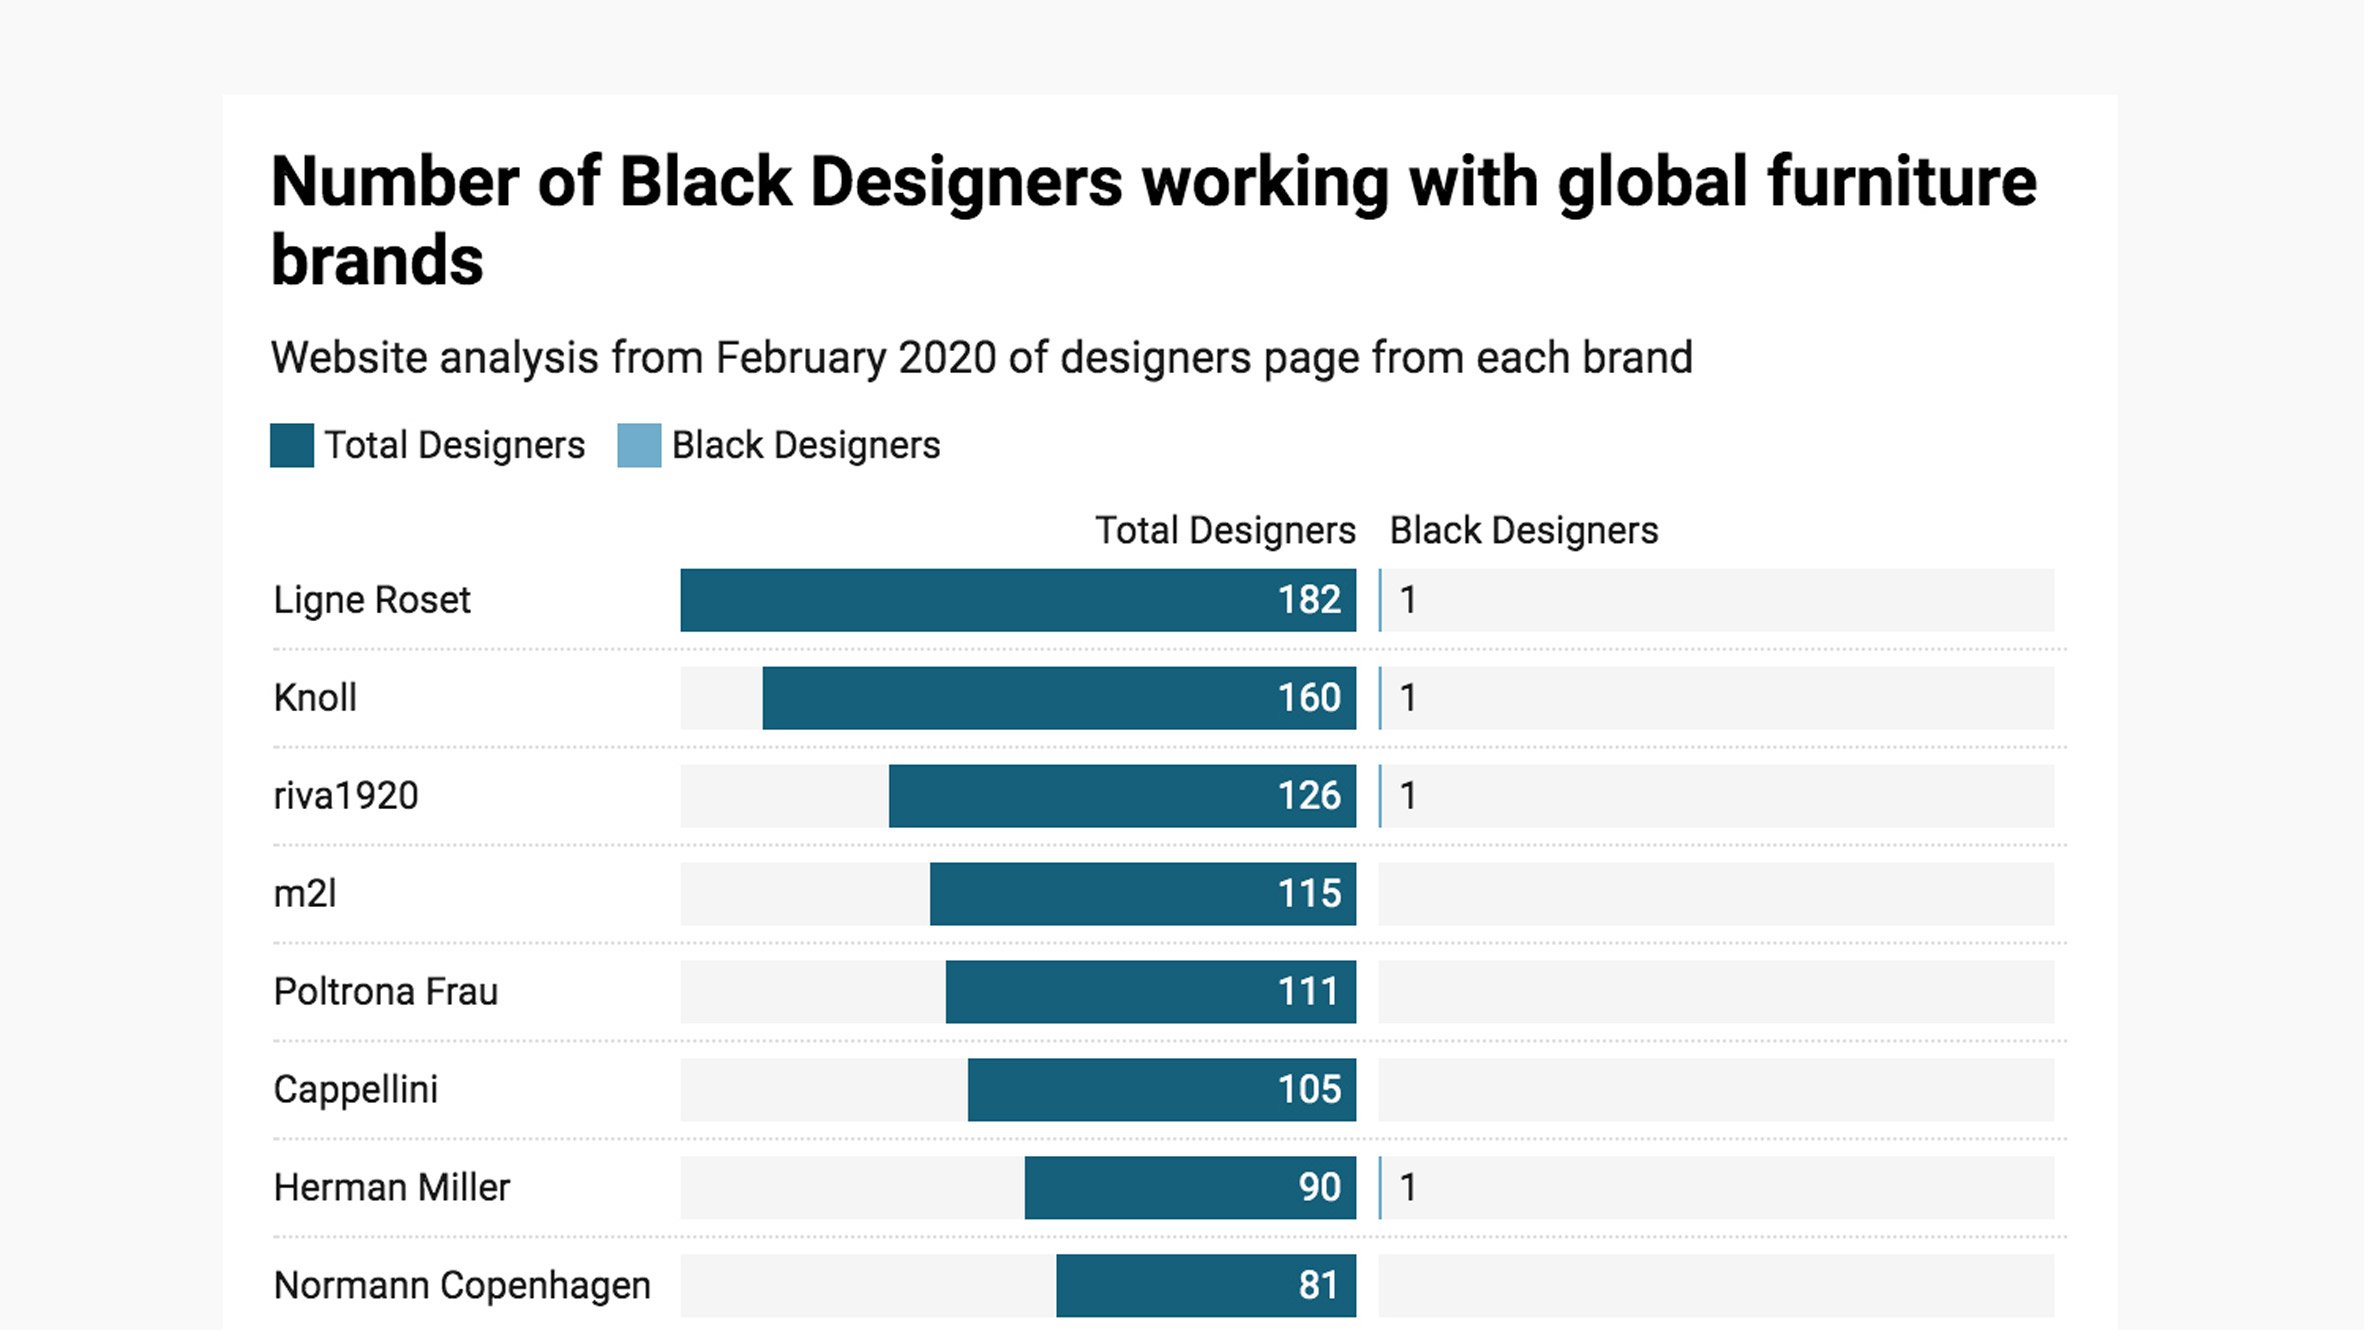 Black designers on Architonic